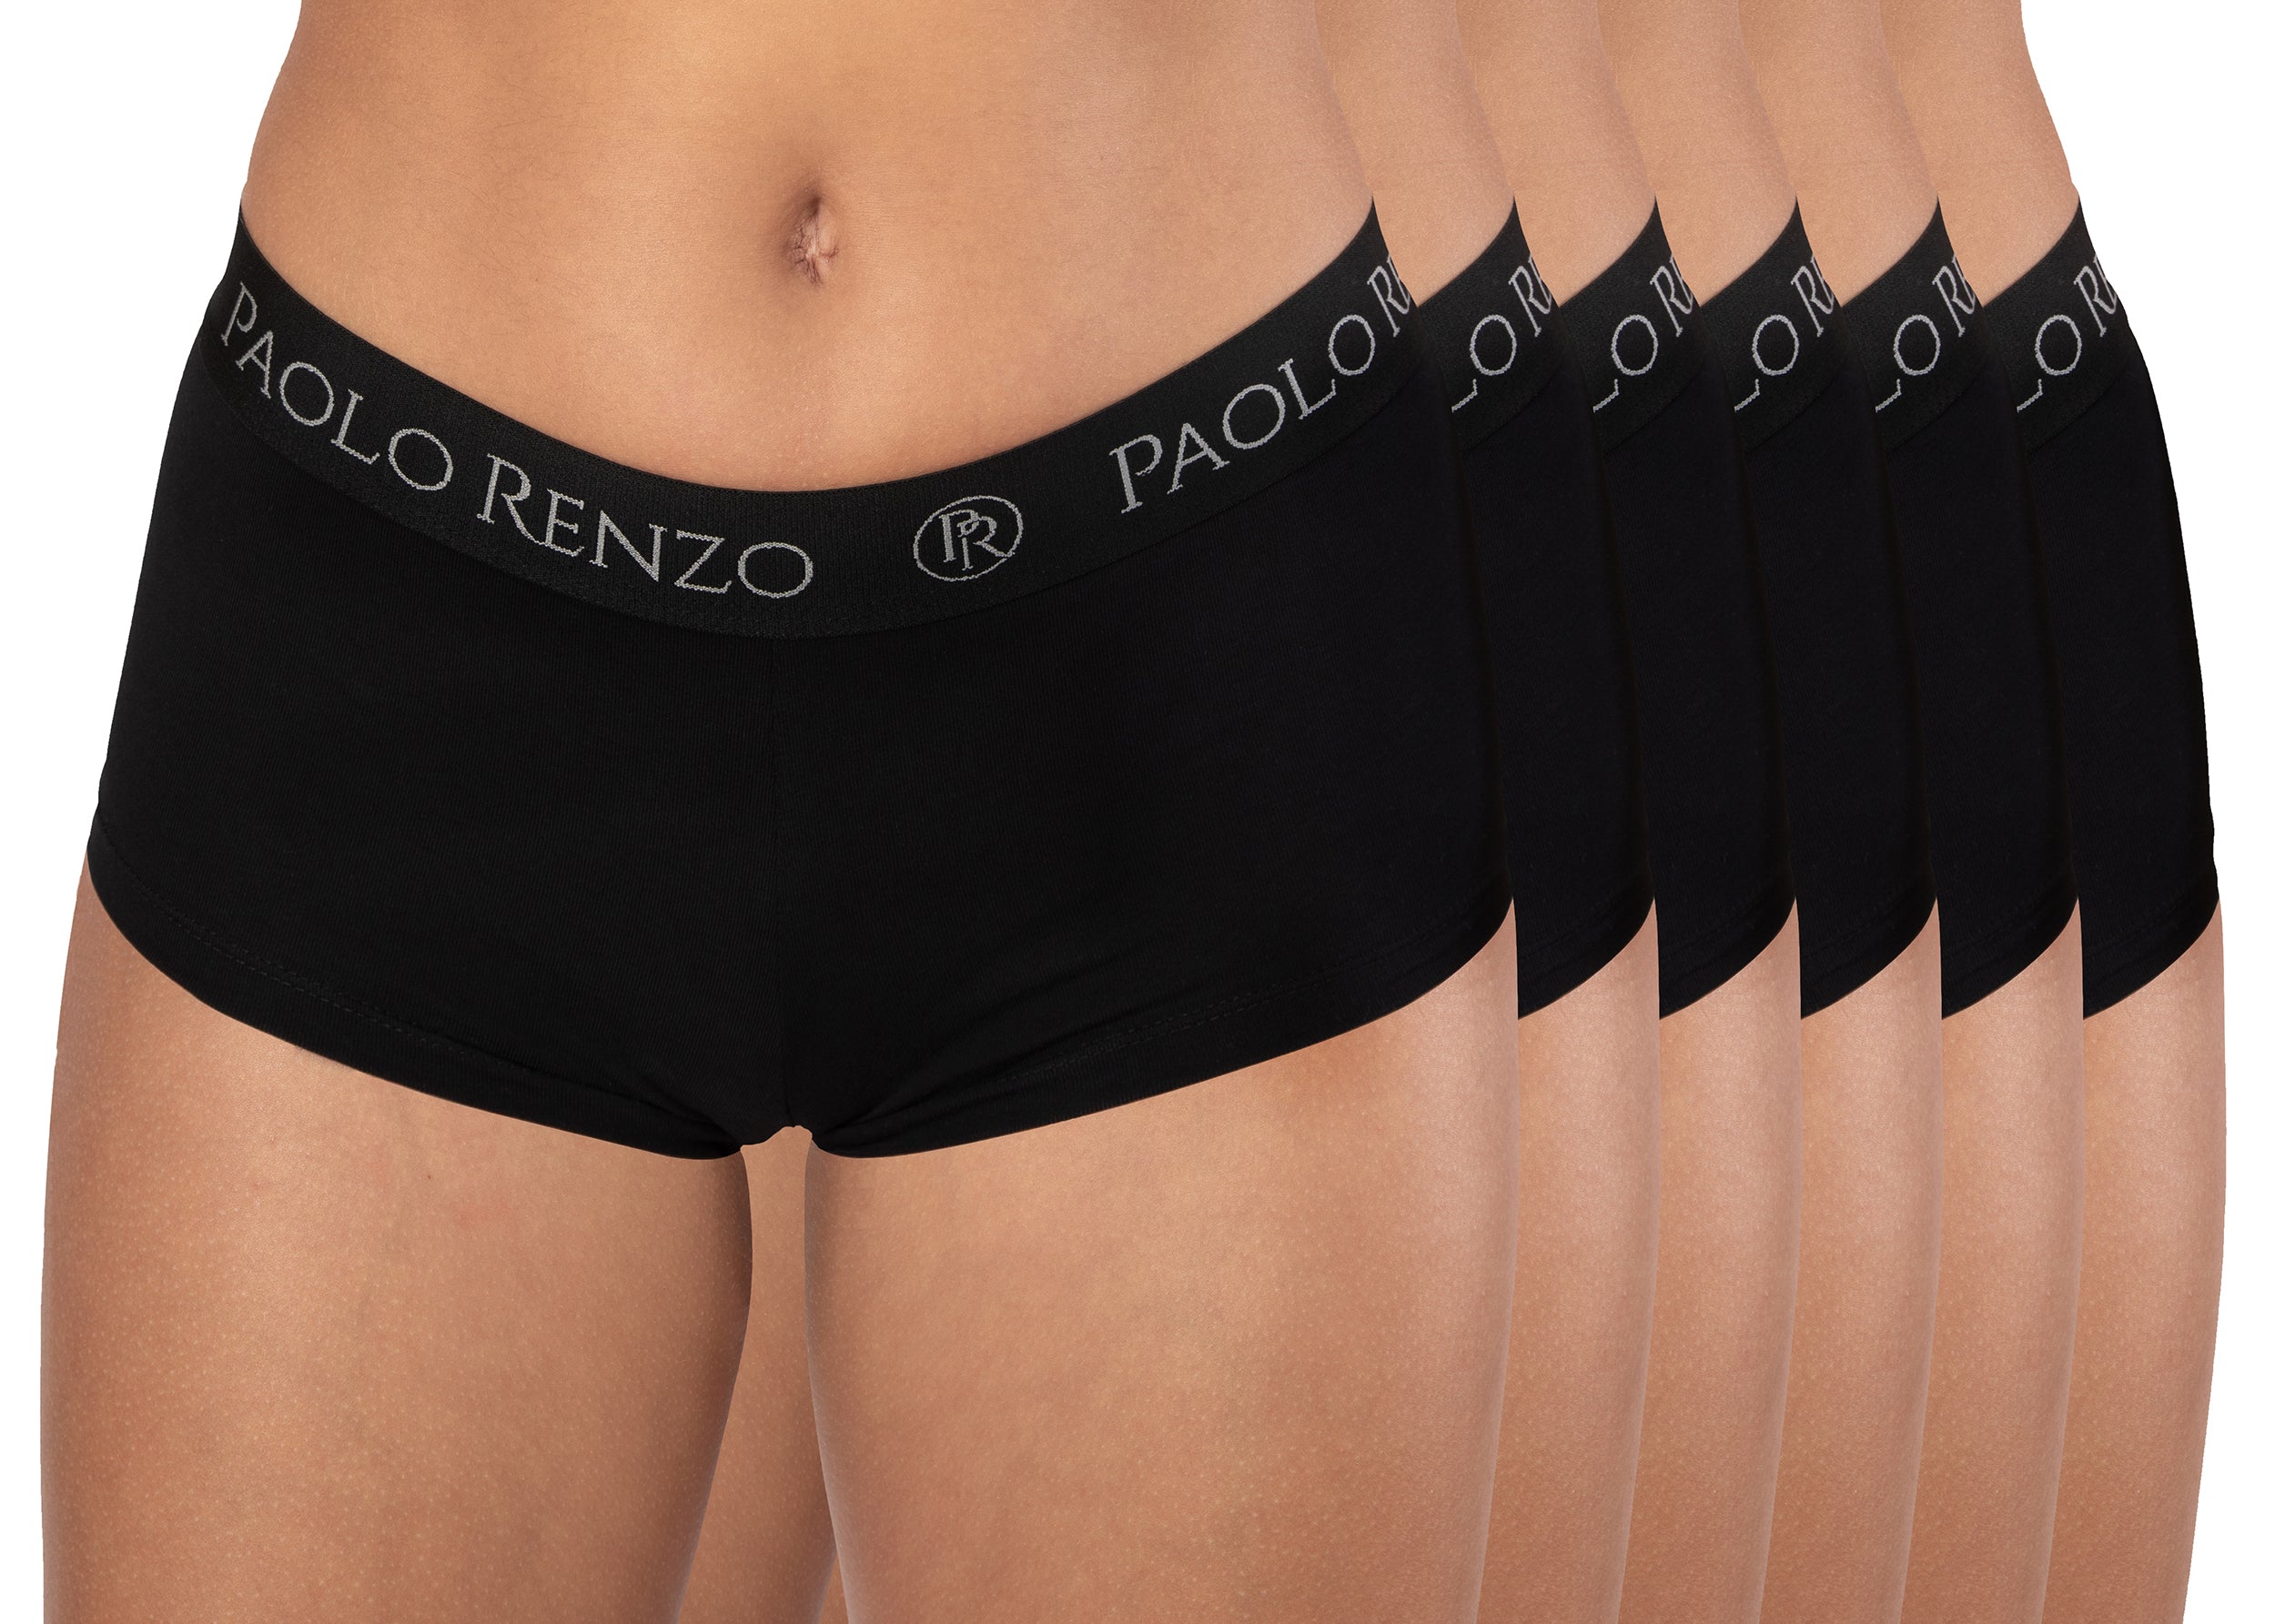 Paolo Renzo® women\'s cotton panty – pairs LINE Traumpreisfabrik 3 or 6 SPORT S, M sizes 